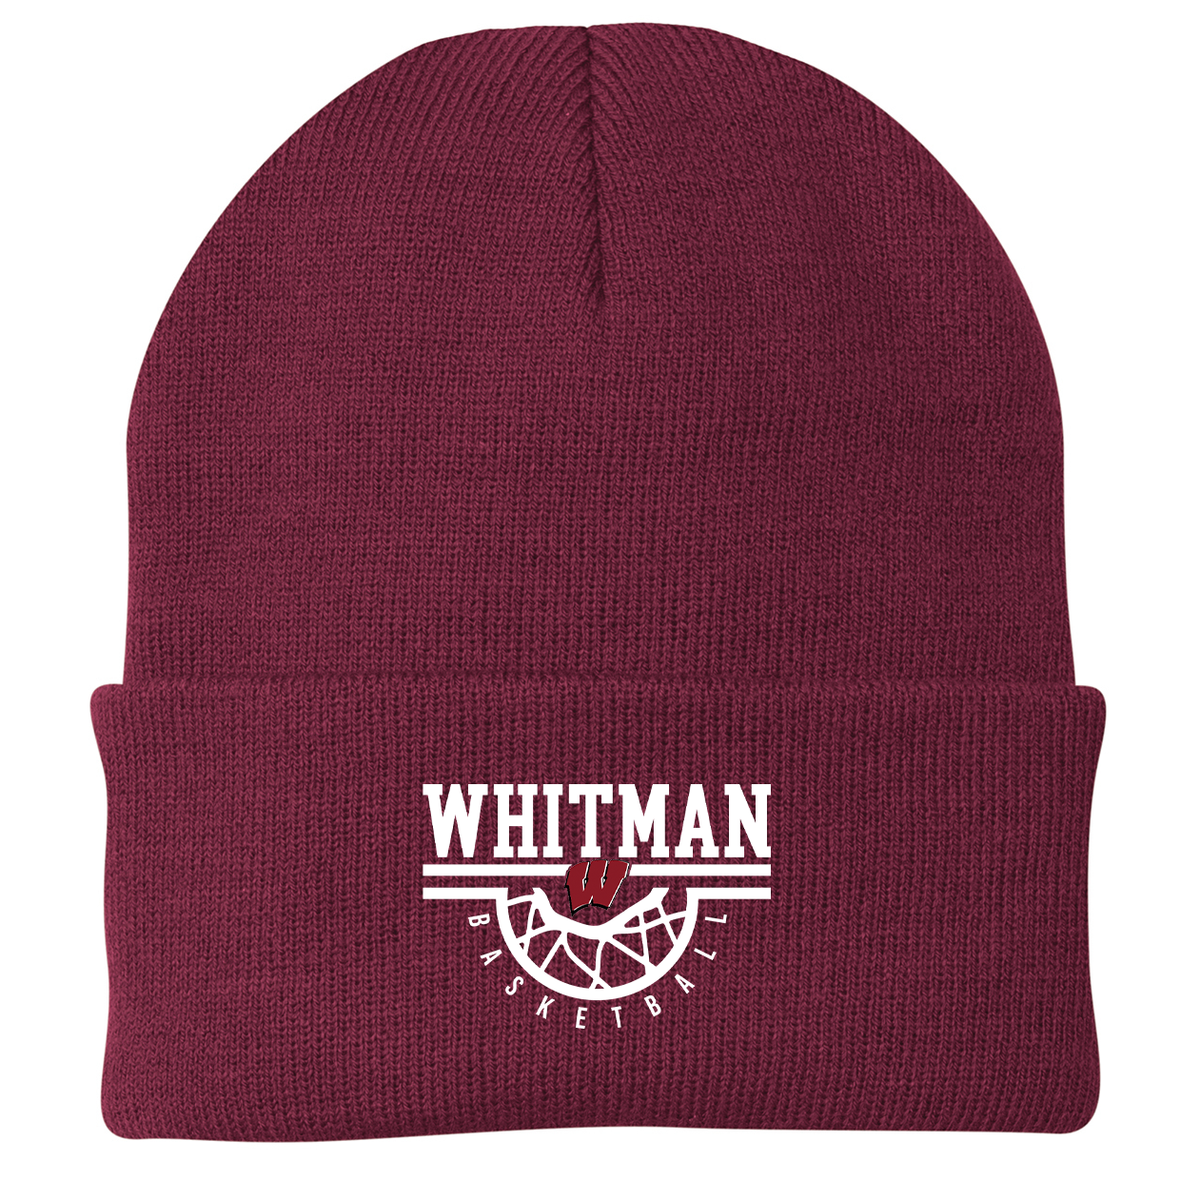 Whitman Women's Basketball Knit Beanie